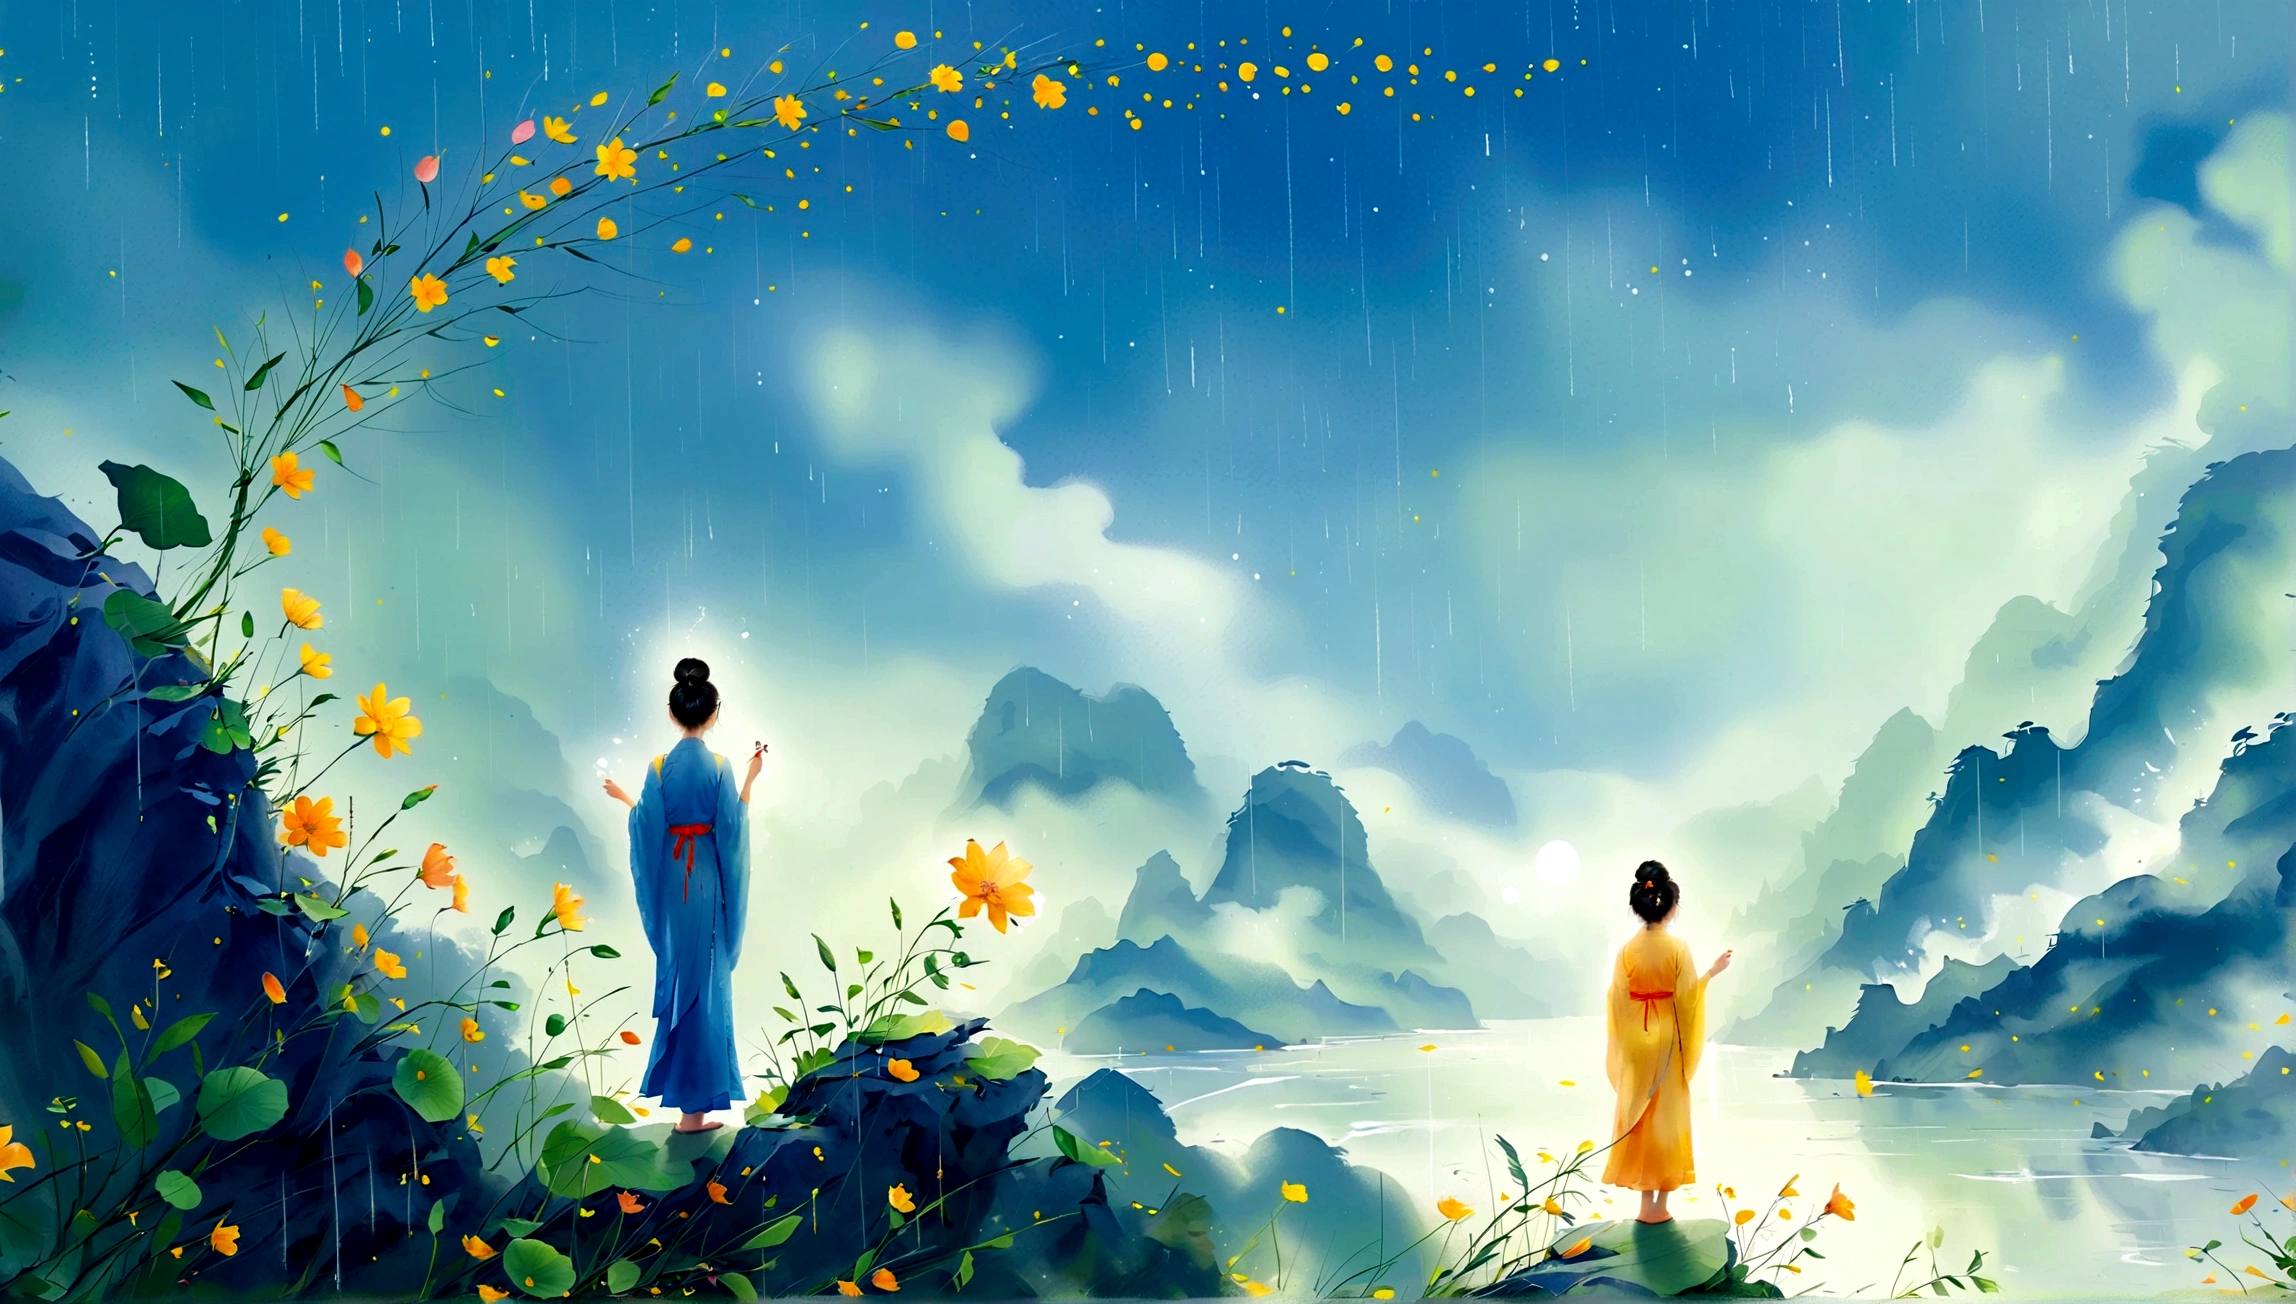 สไตล์ภาพประกอบของ Cai GuoRUN, 1สาว, ผู้หญิงในชุดกระโปรงยาวยืนอยู่บนหน้าผาและมองขึ้นไปบนท้องฟ้าที่เต็มไปด้วยดวงดาว, เทพีแห่งอวกาศ, เทพธิดาทางช้างเผือก, เทพีแห่งสวรรค์, ไม่มีตัวตนเหมือนดวงดาว, ฝัน, พ่อมดสวรรค์แสนสวย, ภาพวาดแฟนตาซีที่สวยงาม, ศิลปะแฟนตาซีที่สวยงาม, แฟนตาซีไม่มีตัวตน, Very ศิลปะแฟนตาซีที่สวยงาม, แฟนตาซีศิลปะดิจิทัล, มีเสน่ห์และน่าหลงใหล, แฟนตาซีบิวตี้, ศิลปะอันงดงามของการเรนเดอร์ออกเทน UHD 8K, แสงปริมาตร, แสงนุ่มนวลเป็นธรรมชาติ, (ละเอียดอ่อนเป็นพิเศษ:1.2, สูญเสียโฟกัส:1.2, มีสีสัน, การจัดแสงภาพยนตร์, การติดตามรังสี), รวยสุด ๆ, ละเอียดมาก, 1cgrssh1, เคียรอสคูโร, ผลงานชิ้นเอก, 8k